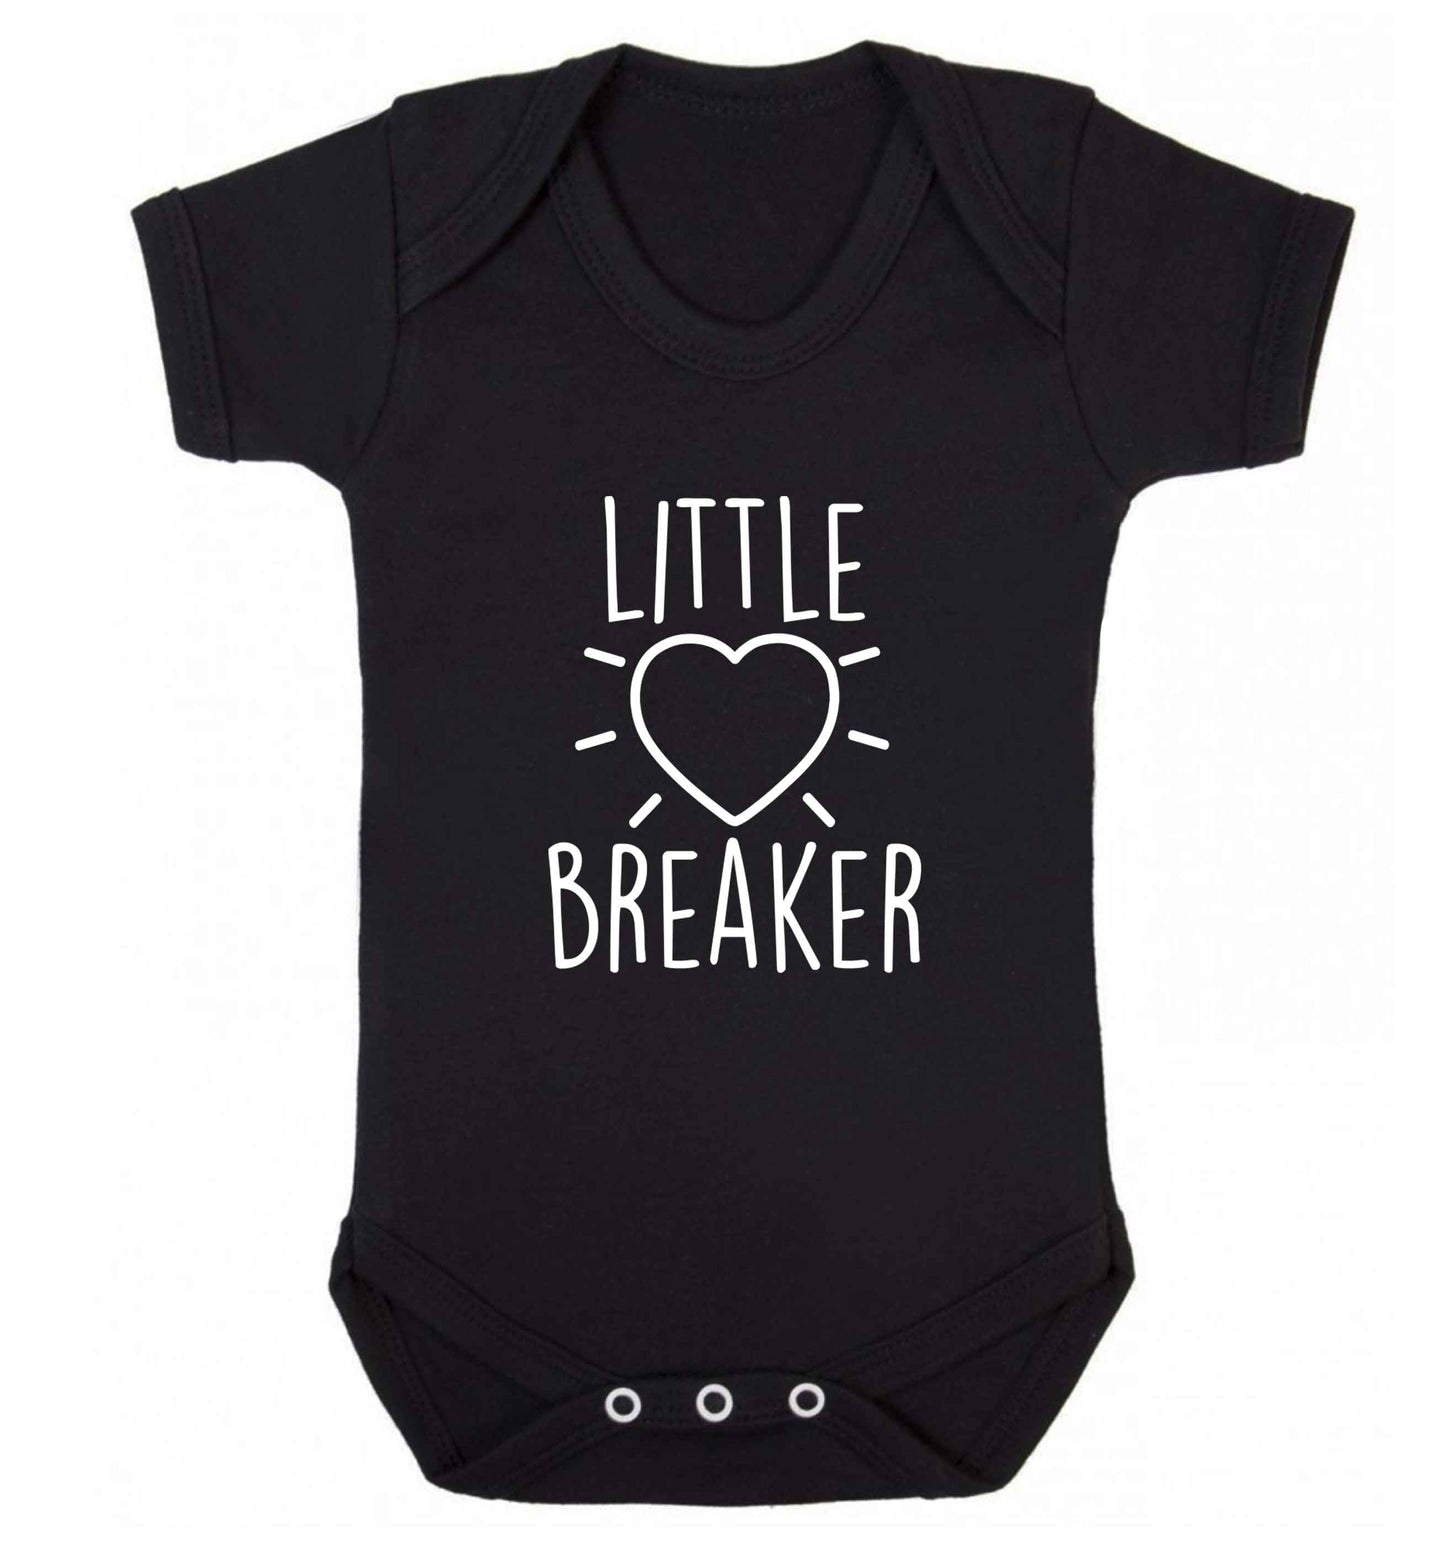 Little heartbreaker baby vest black 18-24 months